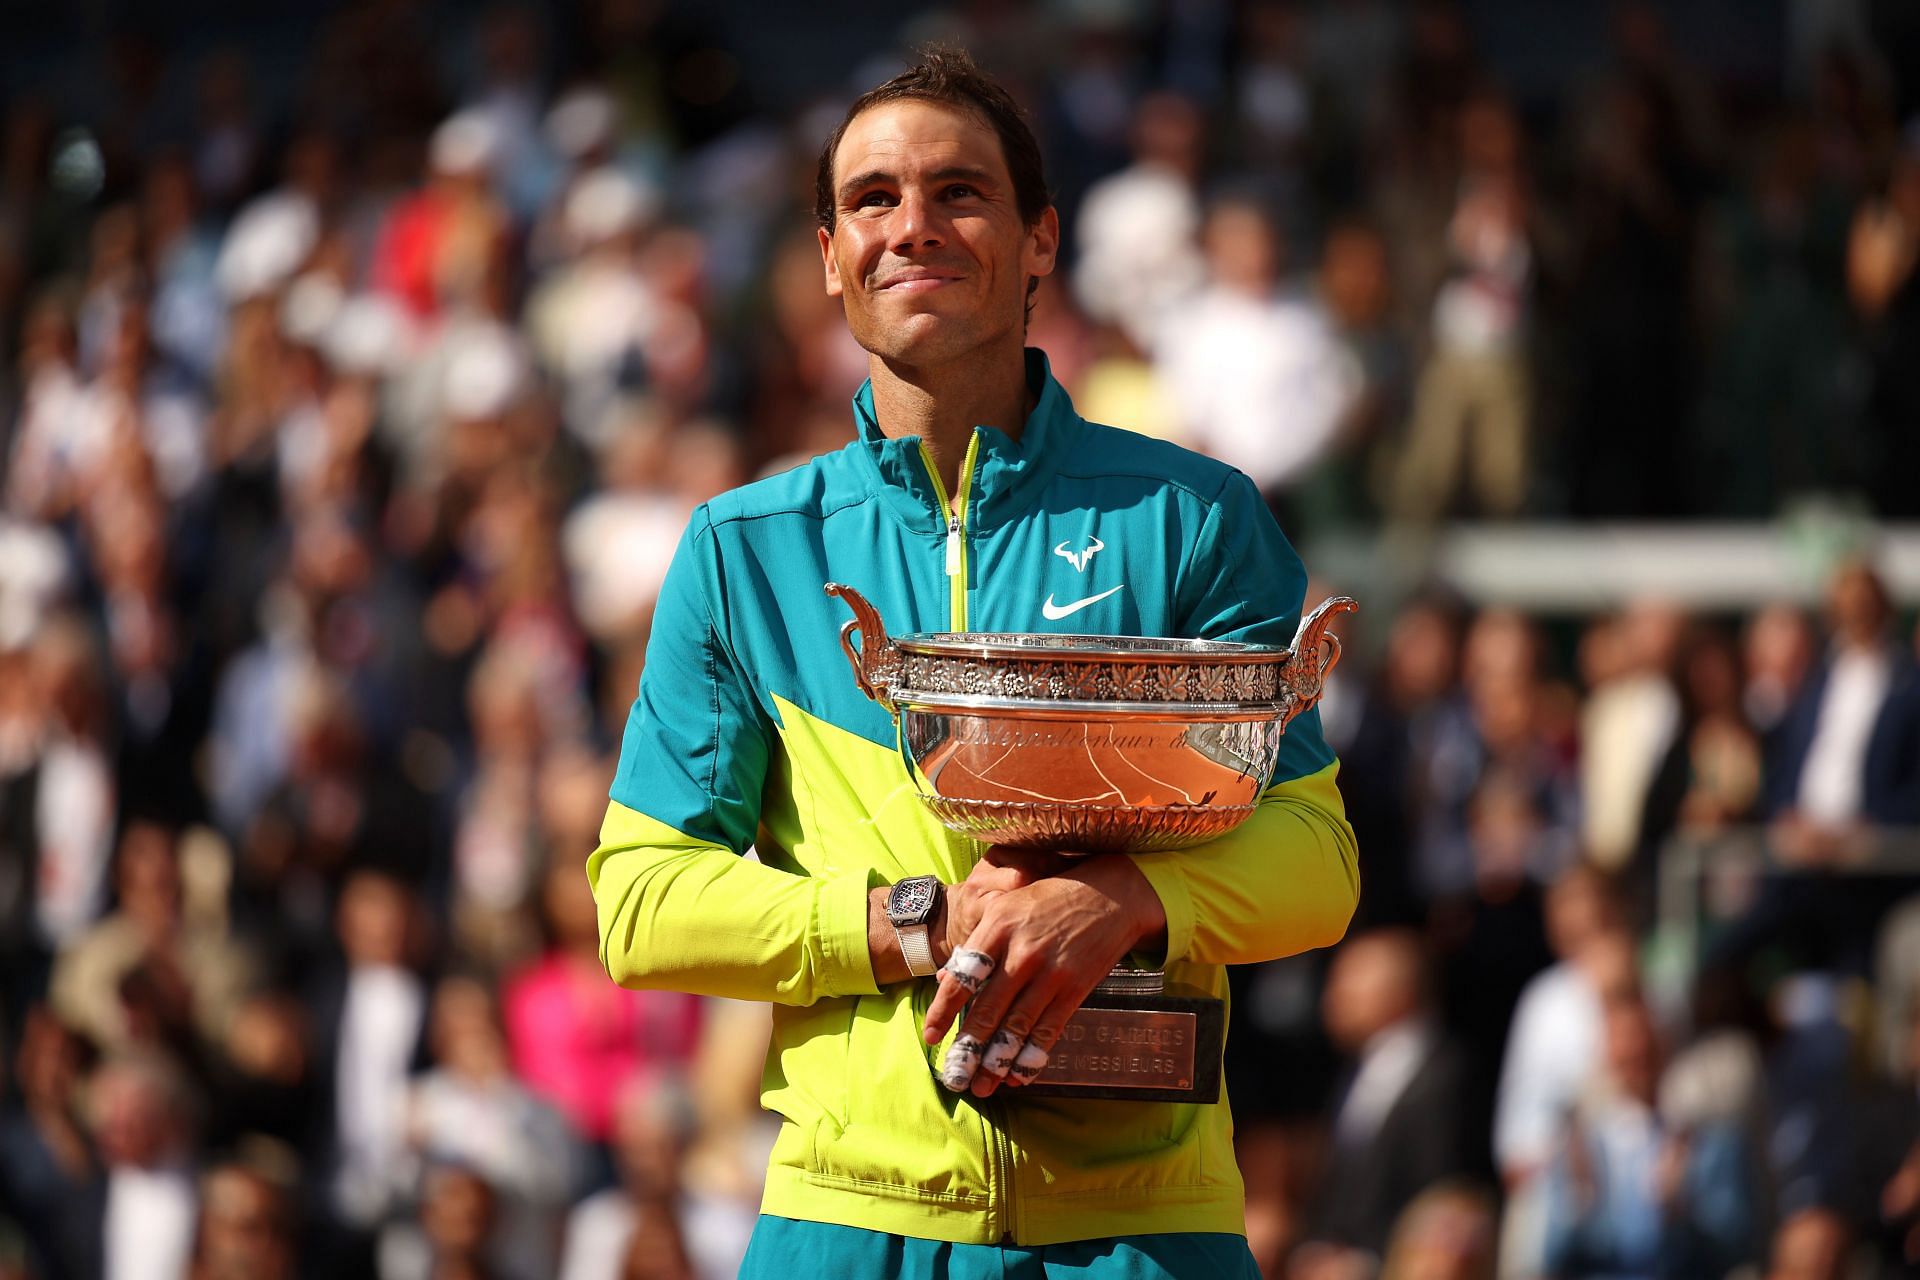 Rafael Nadal won the 2022 French Open